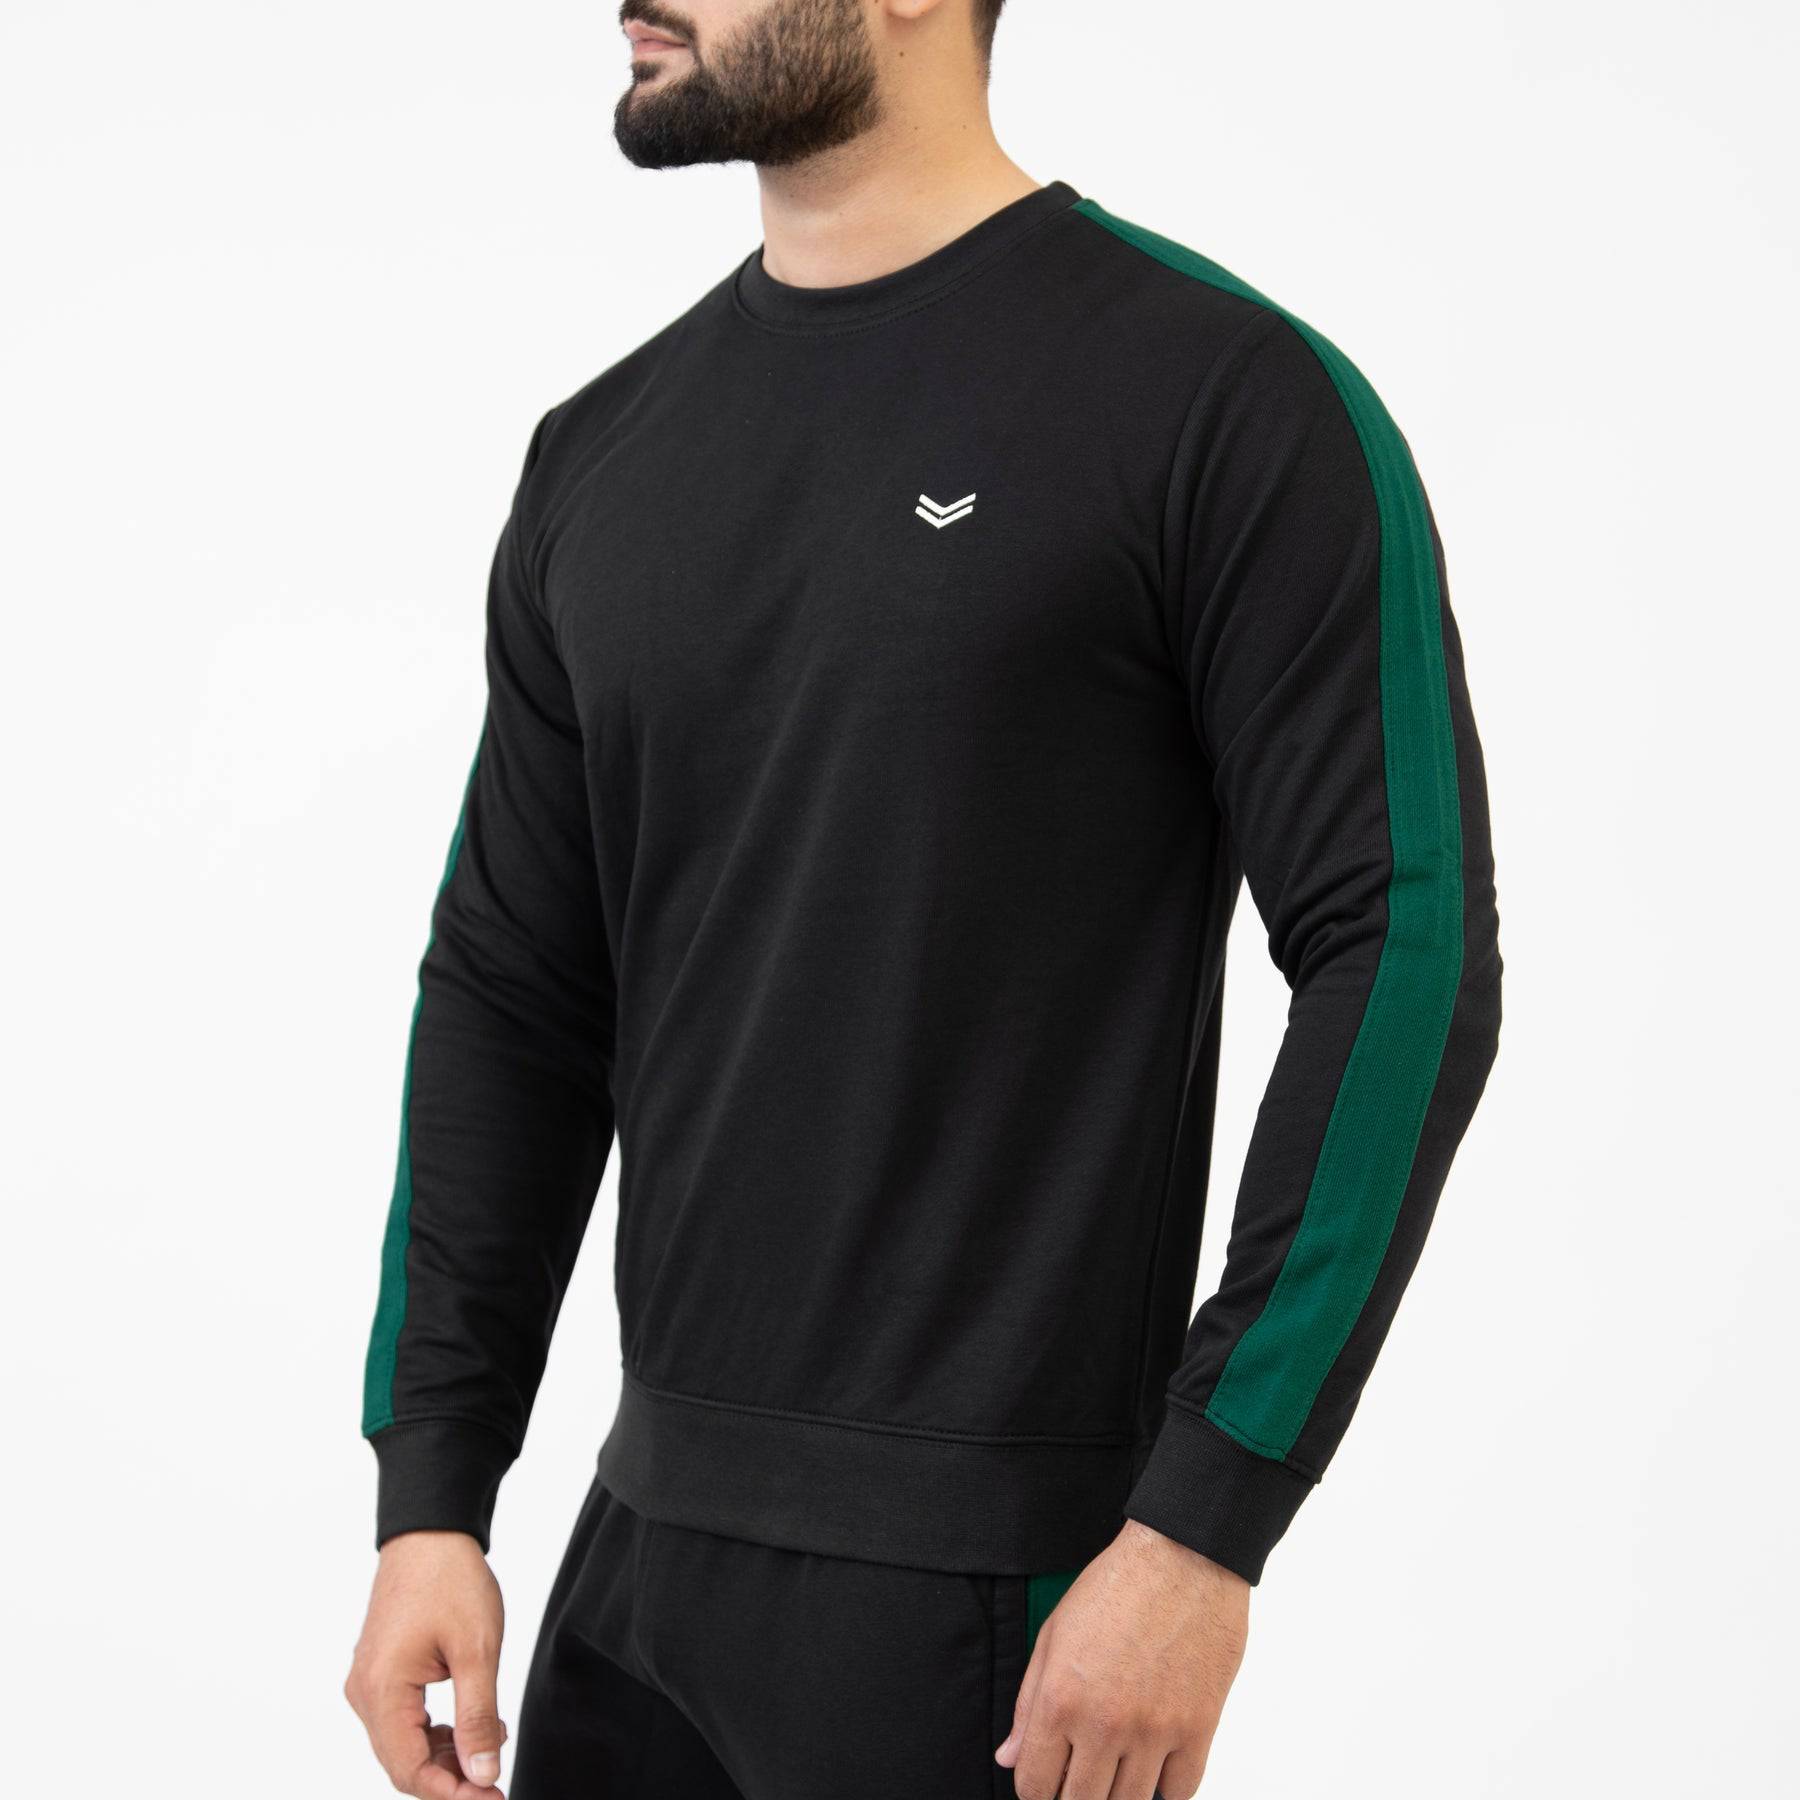 Black Sweatshirt with Green Panels - Valetica Sports